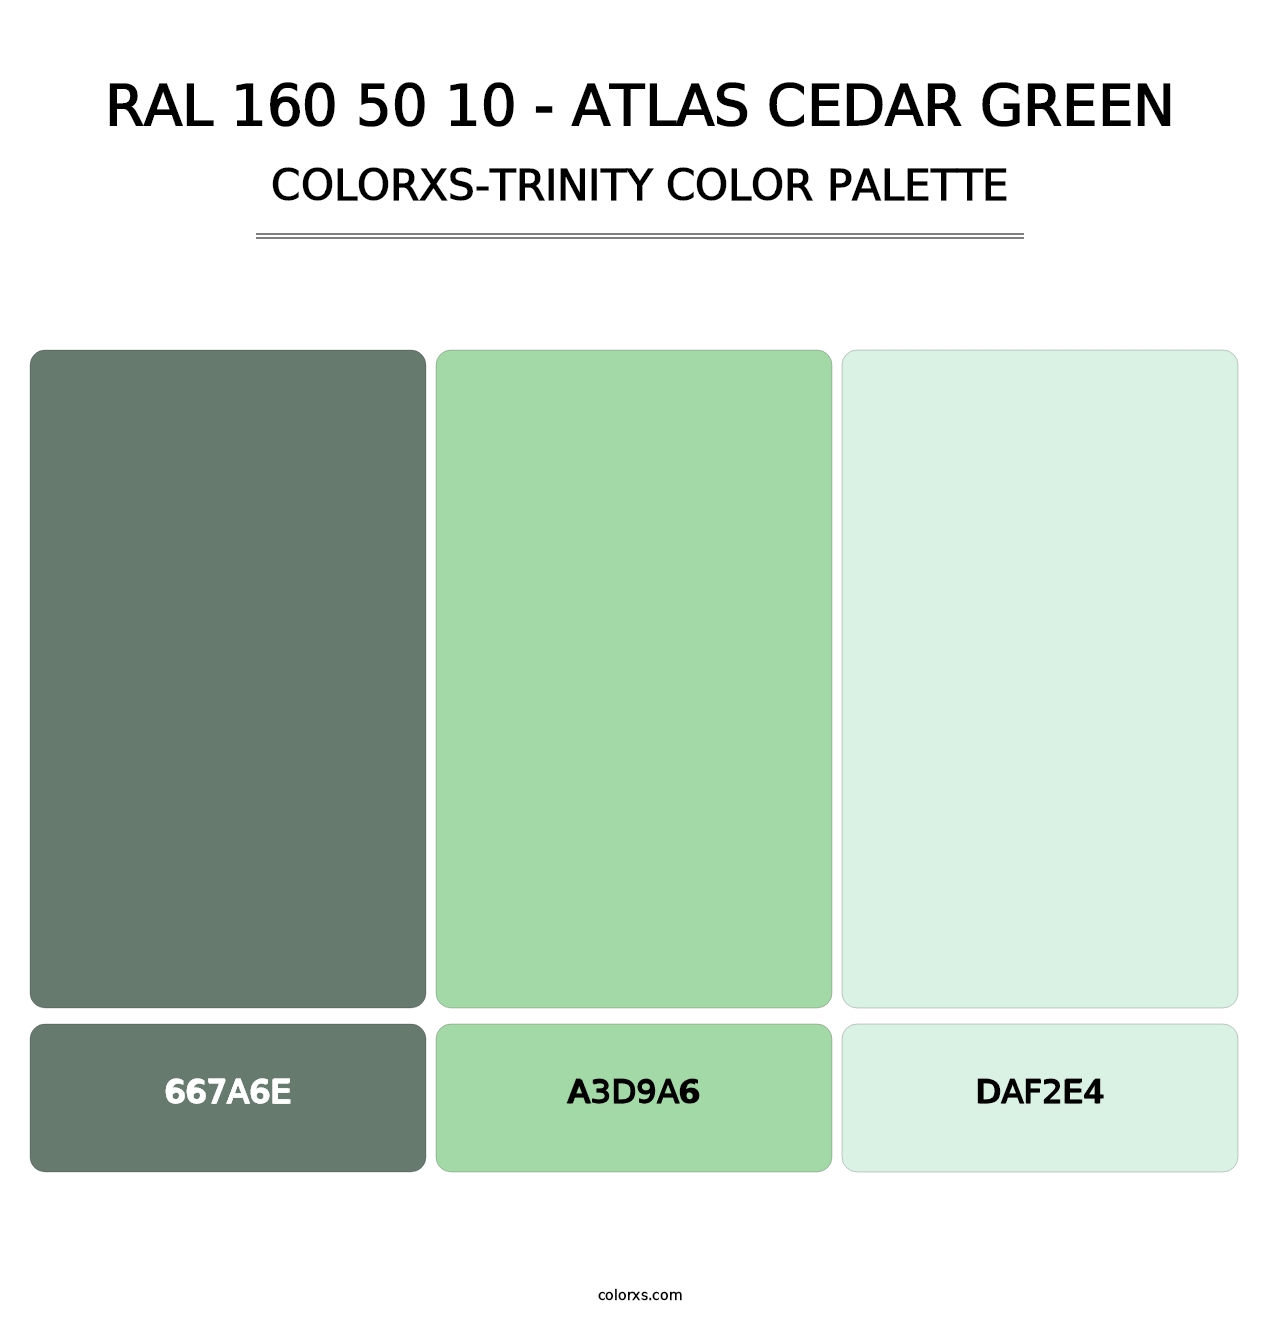 RAL 160 50 10 - Atlas Cedar Green - Colorxs Trinity Palette